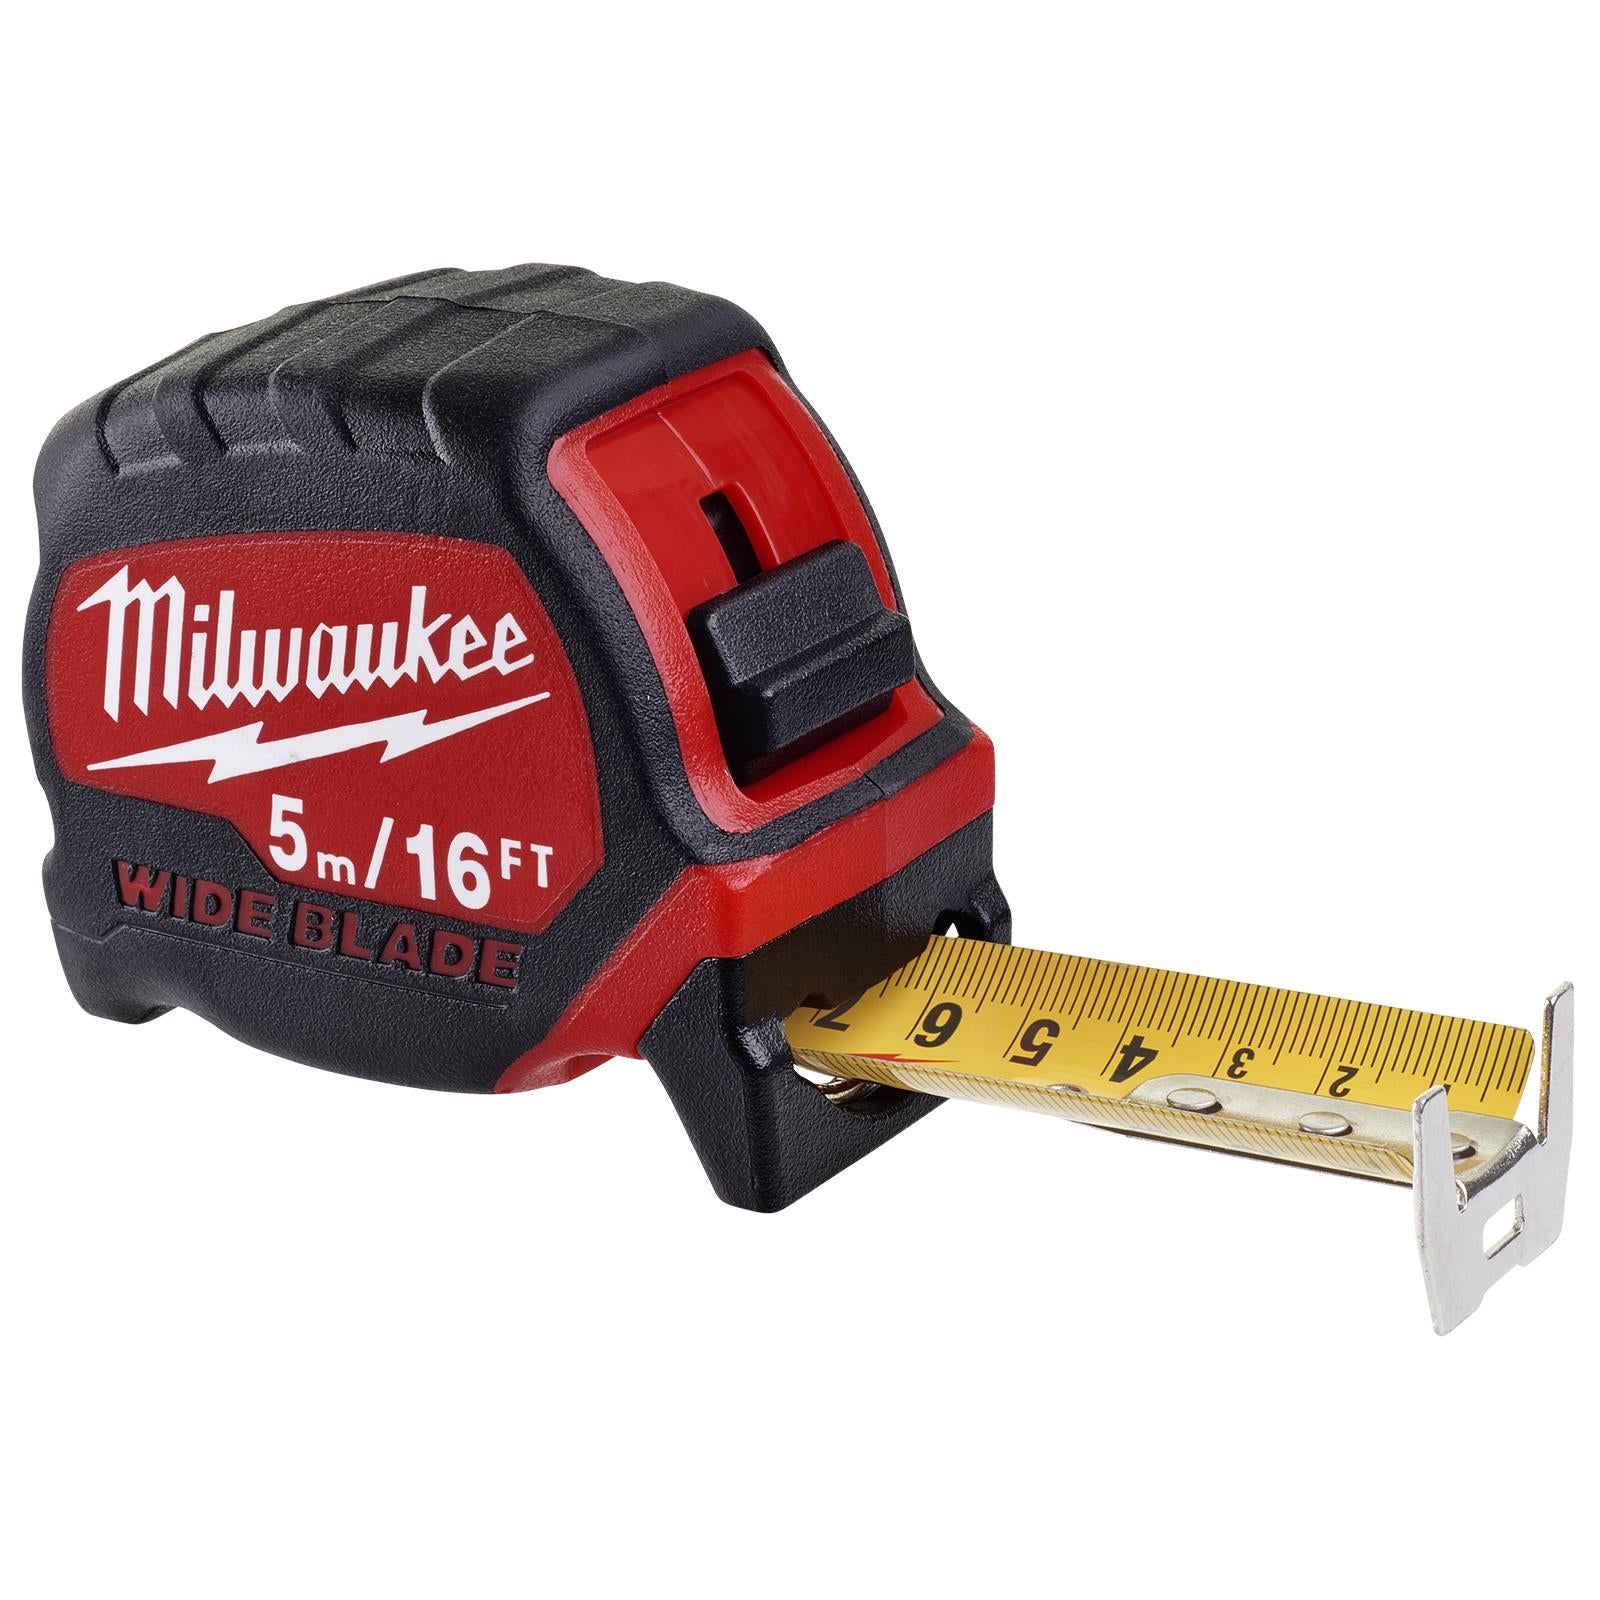 Milwaukee Tape Measure 5m 16ft Premium Wide Blade 33mm Metric Imperial